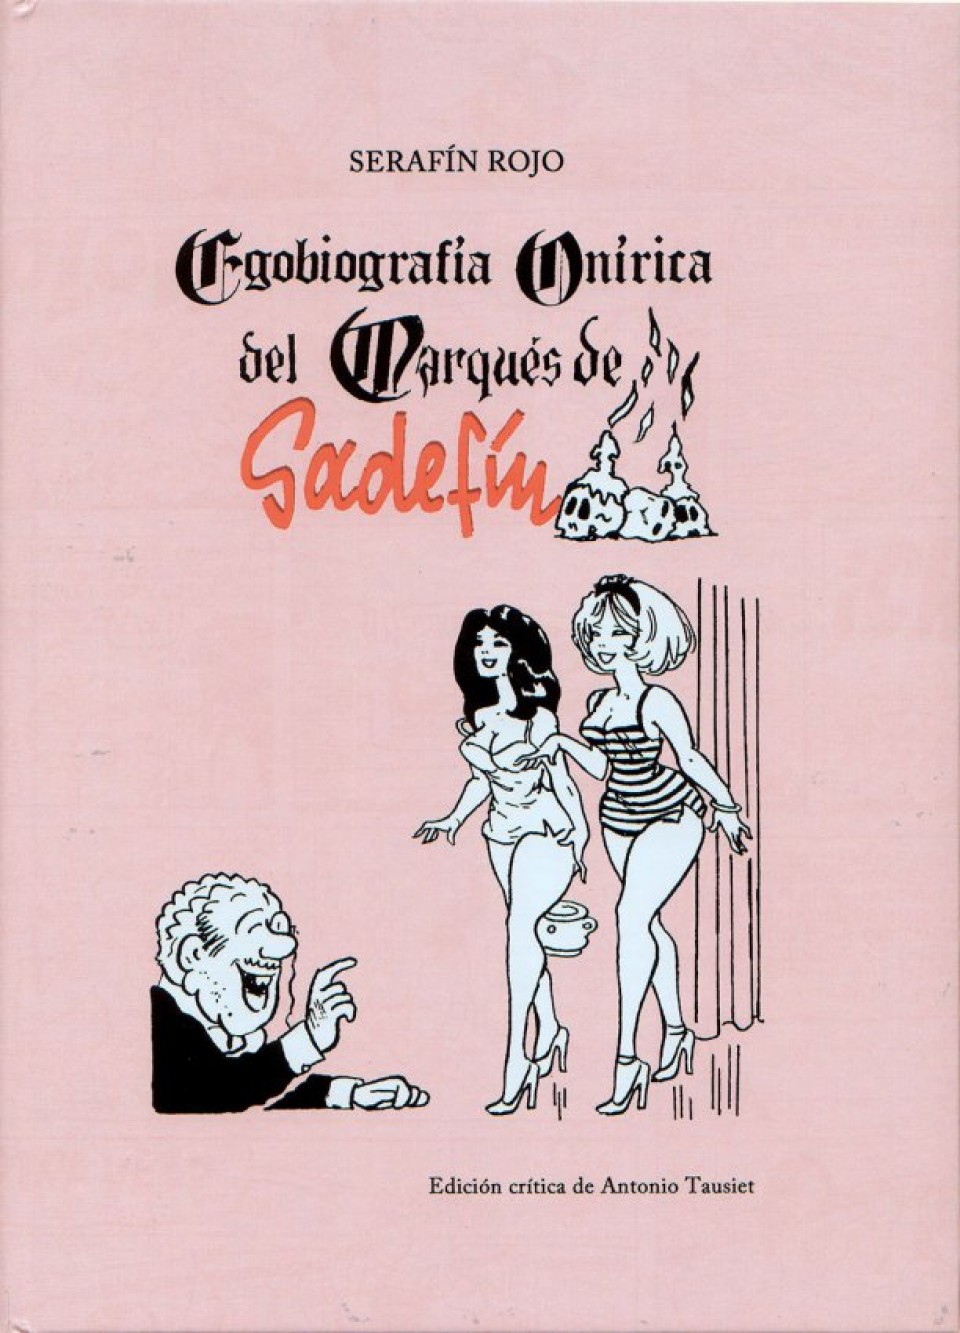 Imagen egobiografia-onirica-del-marques-de-sadefin-libros-prohibidos-2016.jpg